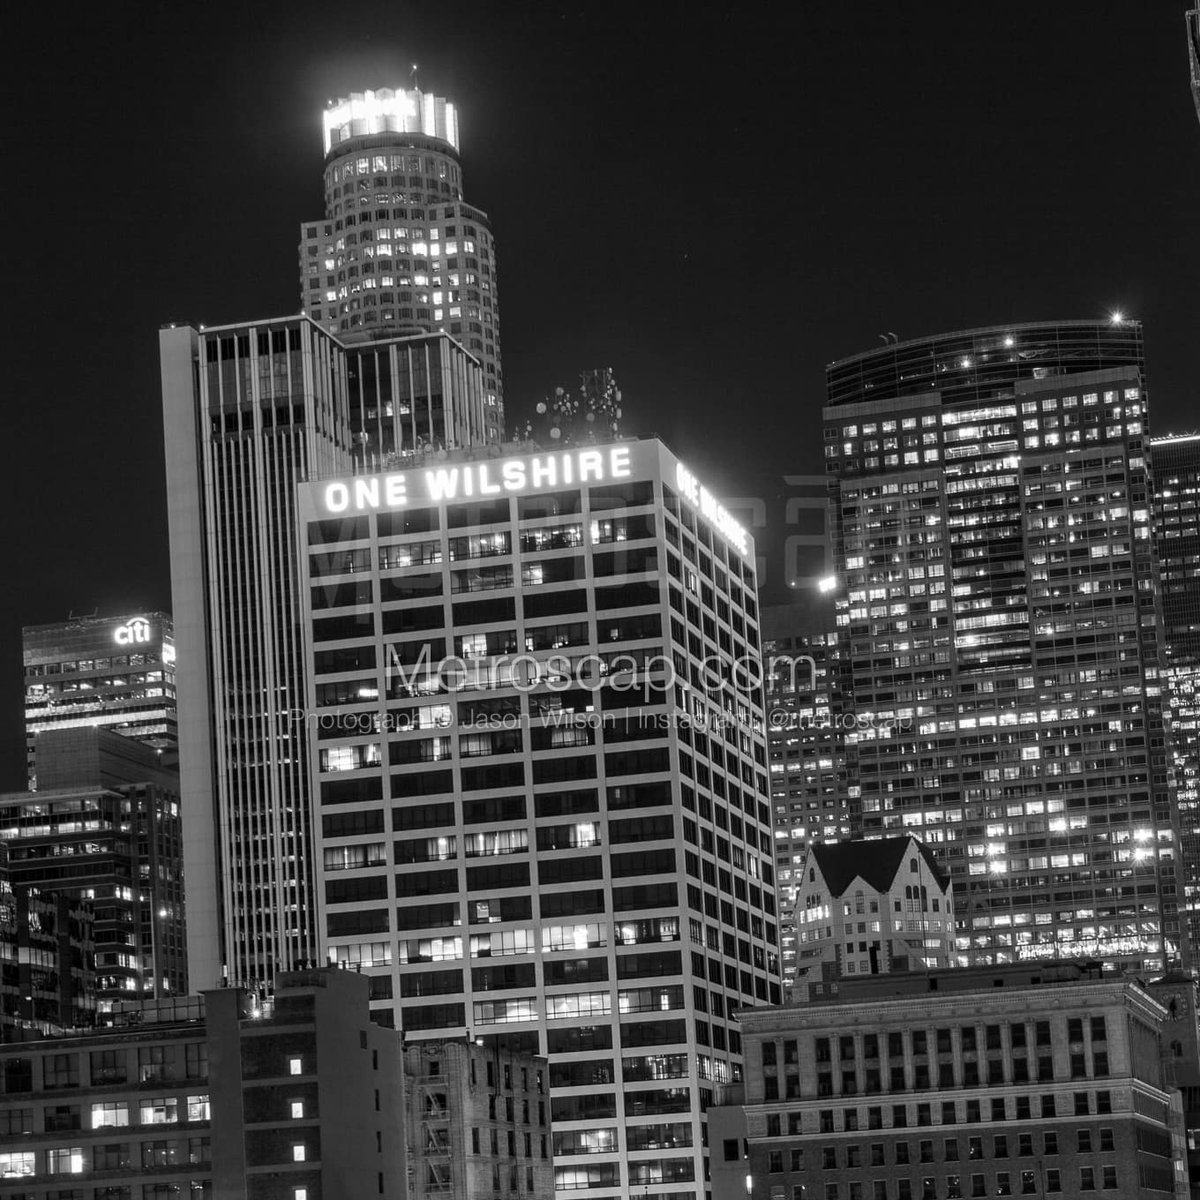 Los Angeles photos Black & White: The One Wilshire Building at Night #losangeles #la #dtla #hollywood #downtownla #beverlyhills #santamonica #213 #lax #BlackWhite | metroscap.com/vintage-los-an…